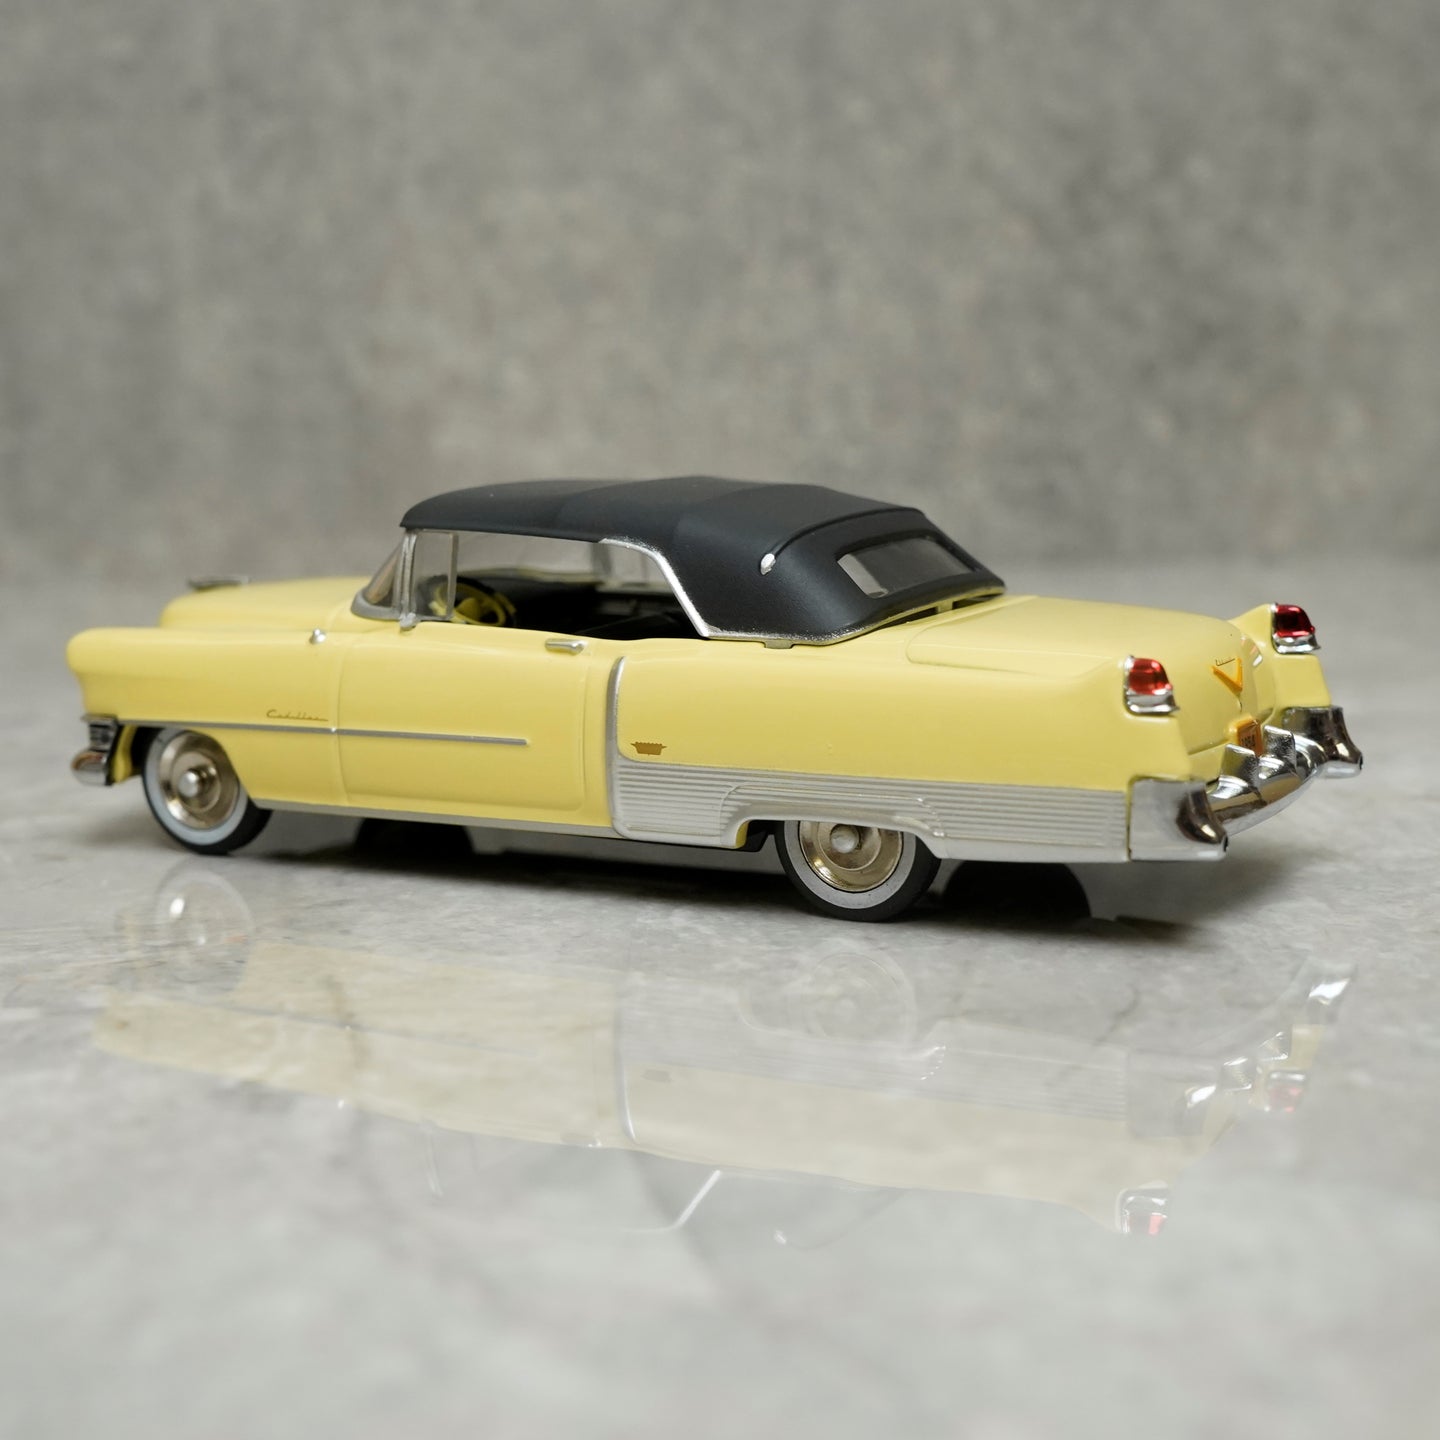 1954 Cadillac Eldorado Convertible Alloy Diecast Car Model 1:43 By GFCC